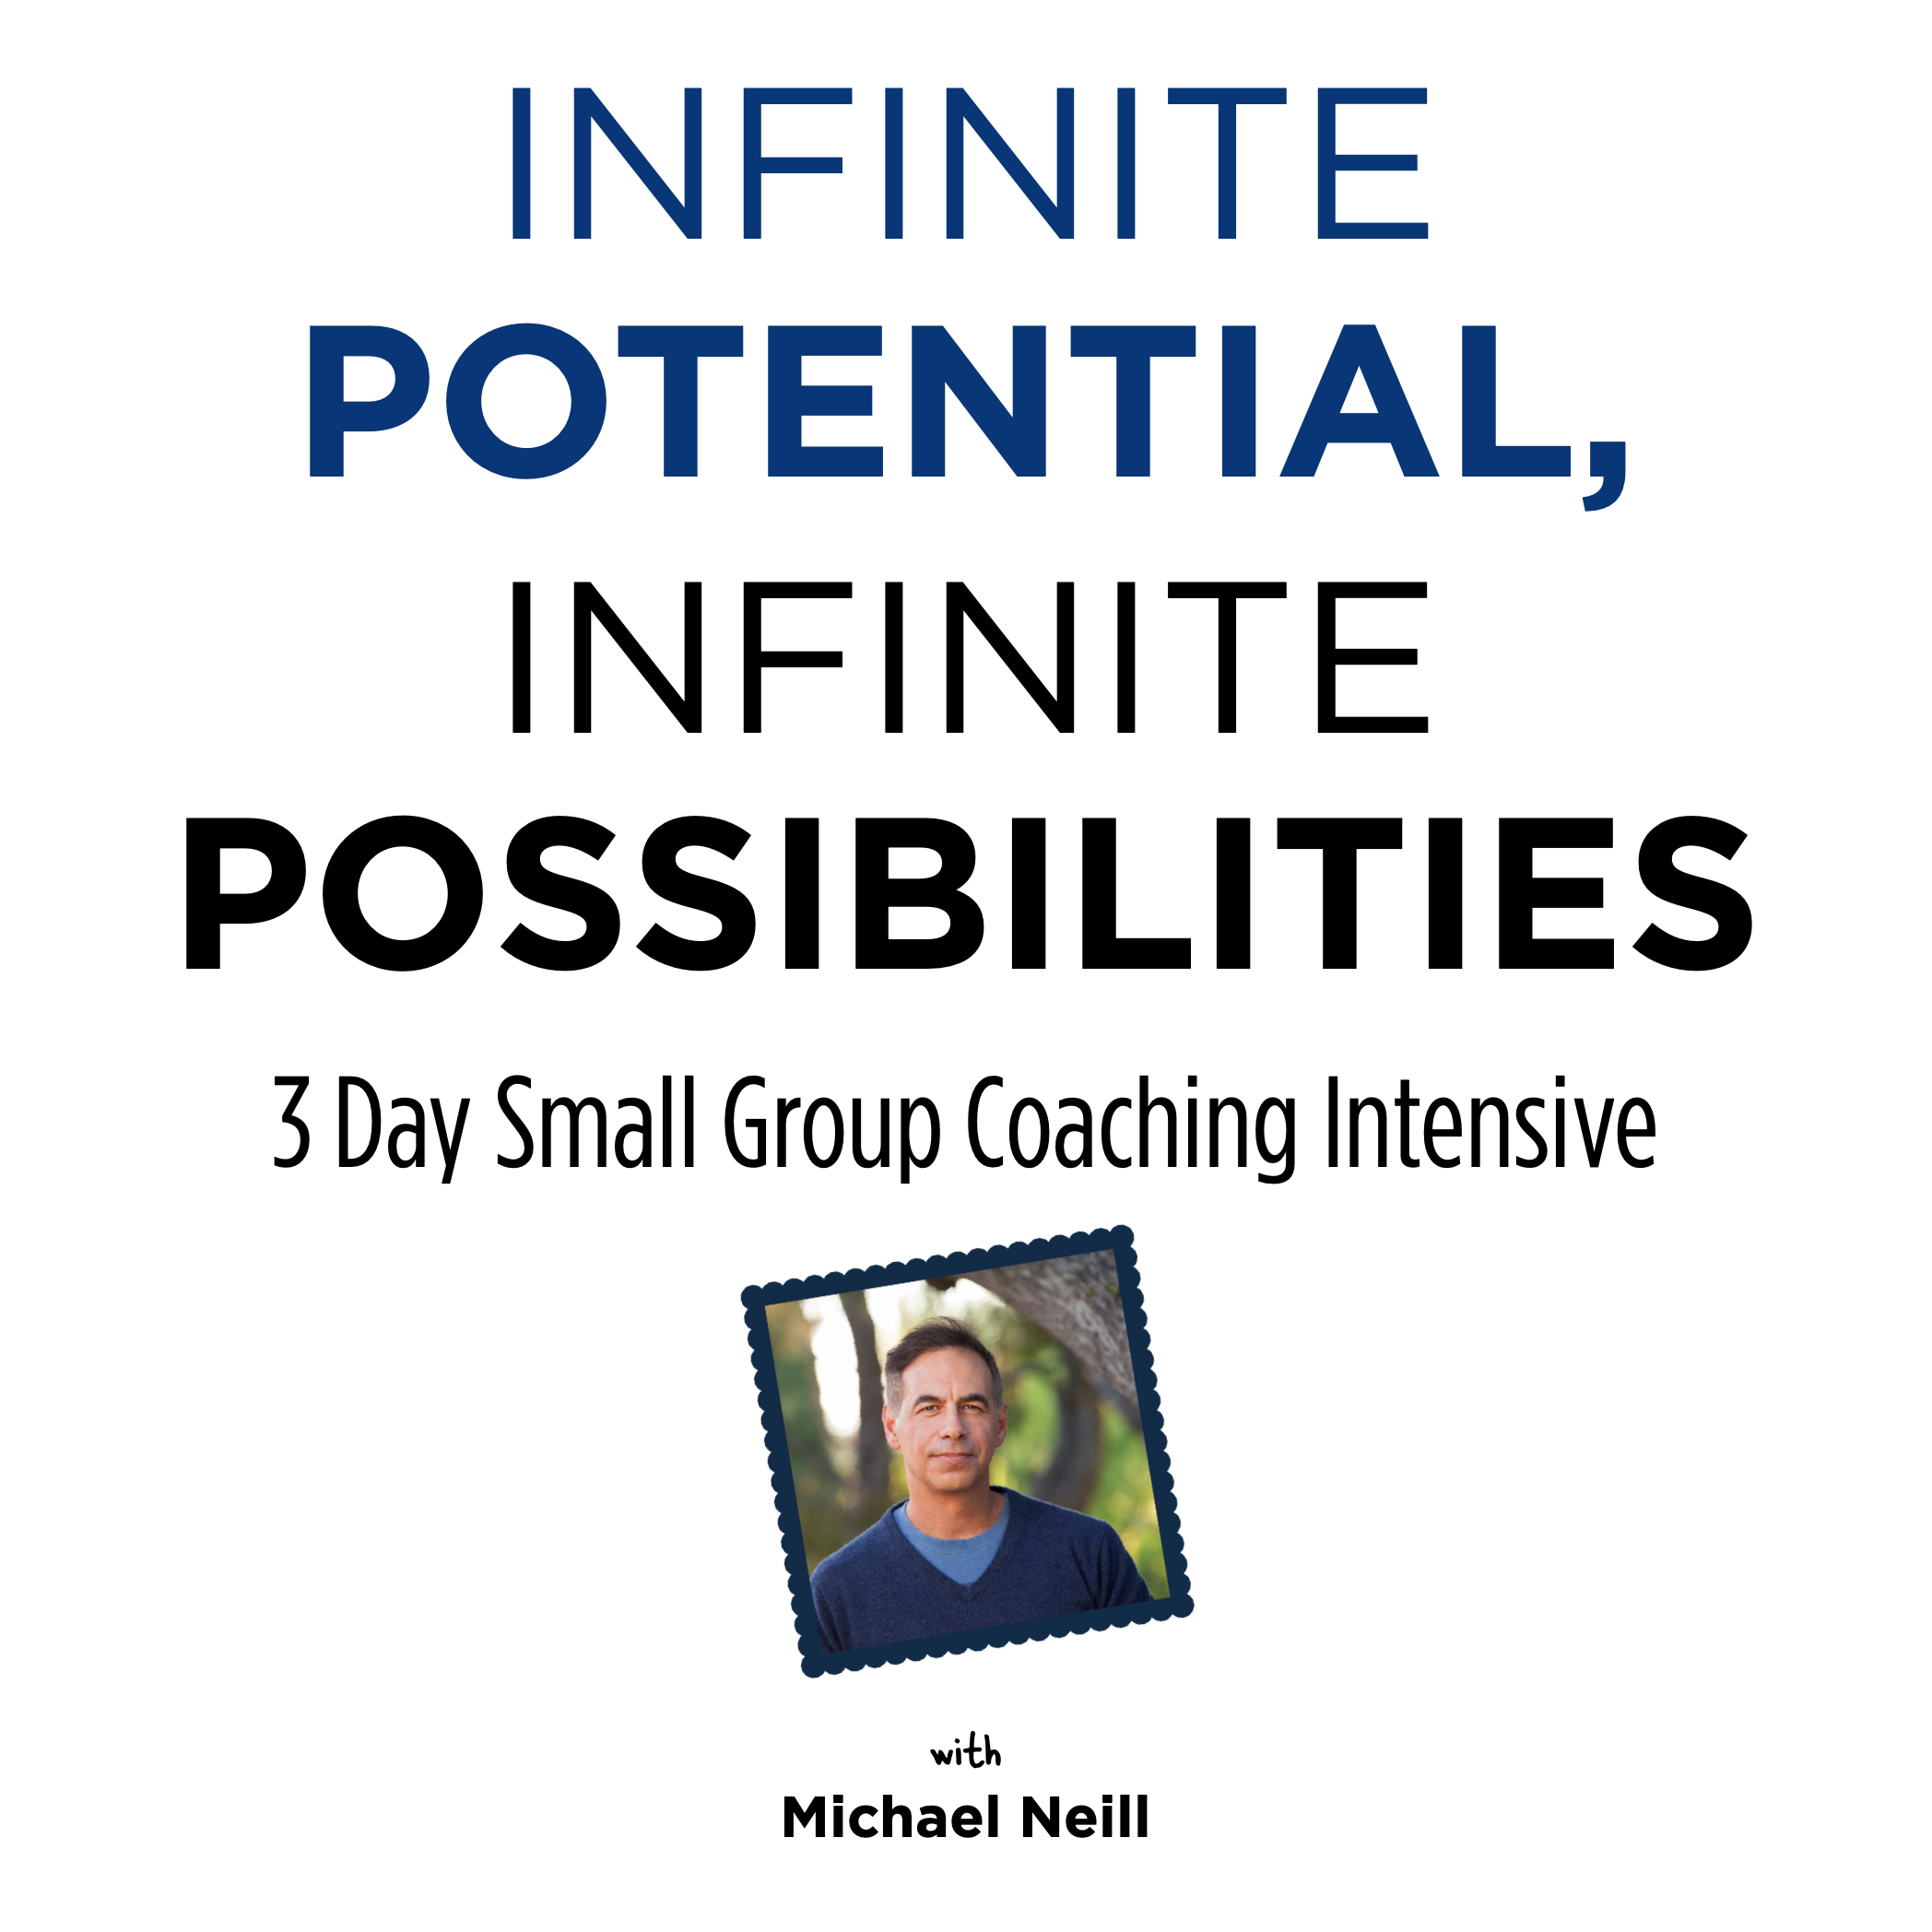 Infinite Potential Infinite Possibilities Prague – May 27th – 29th